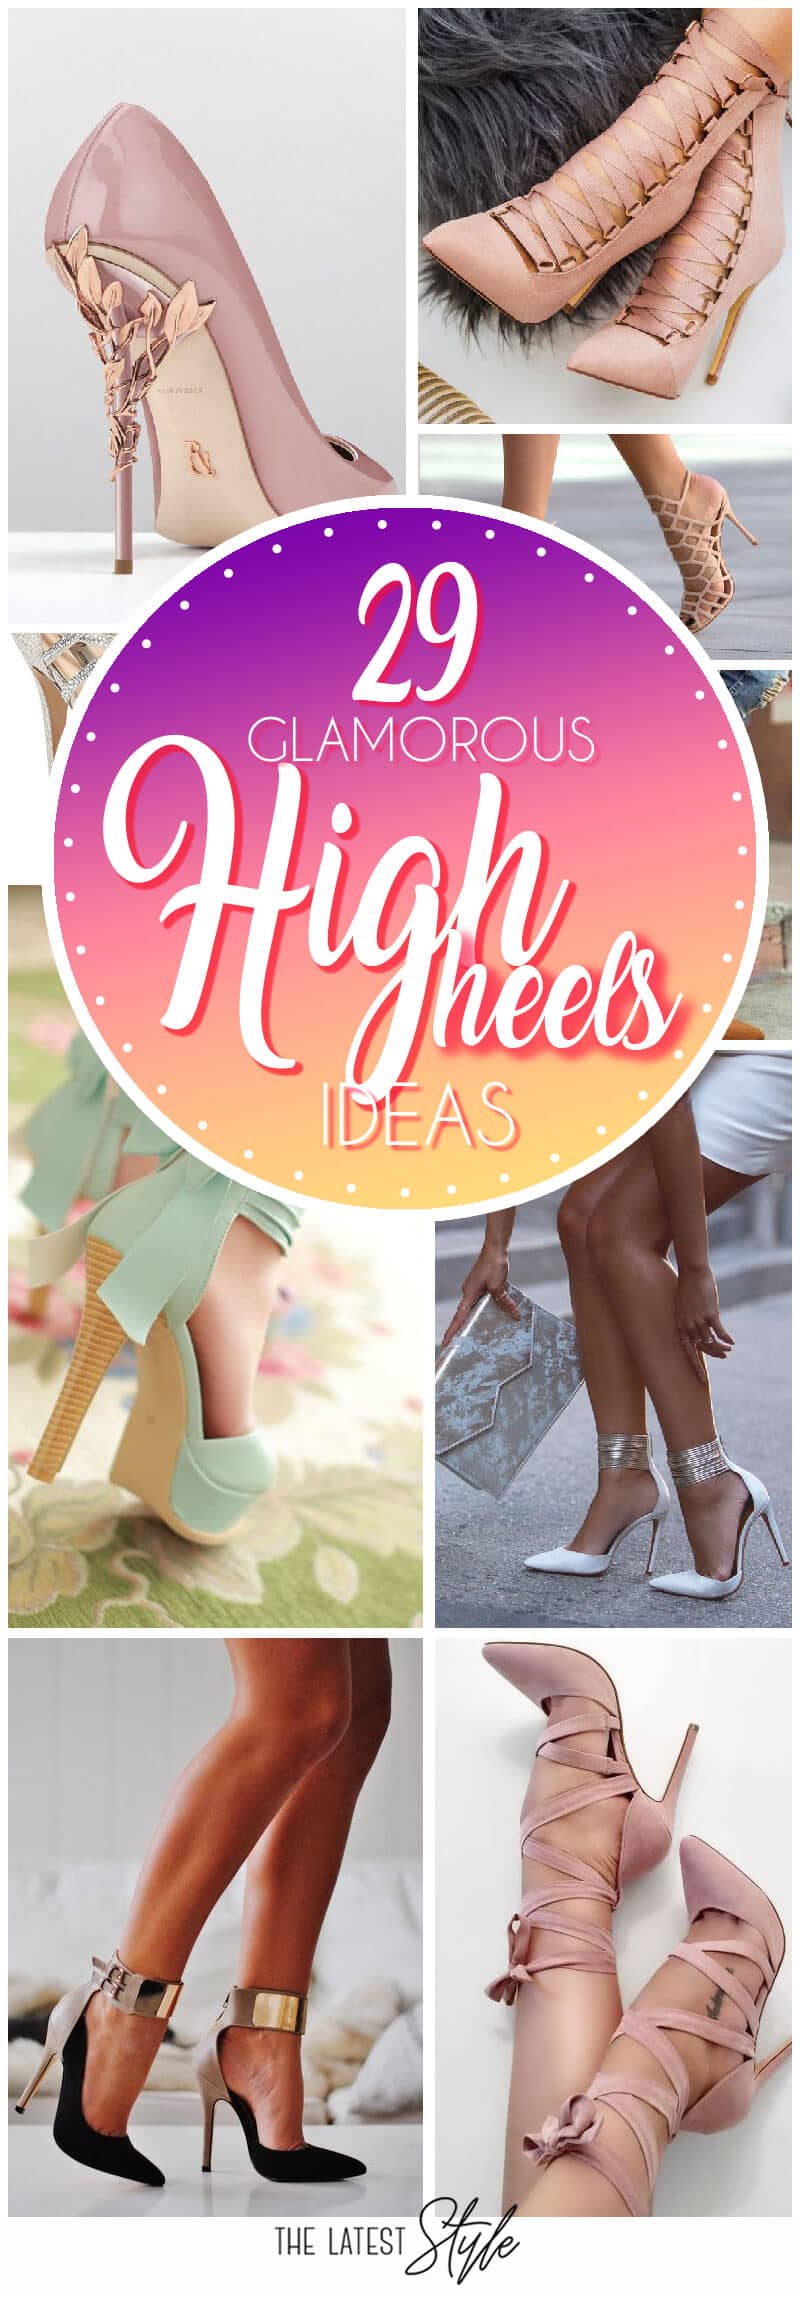 29 Glamorous High Heels Ideas